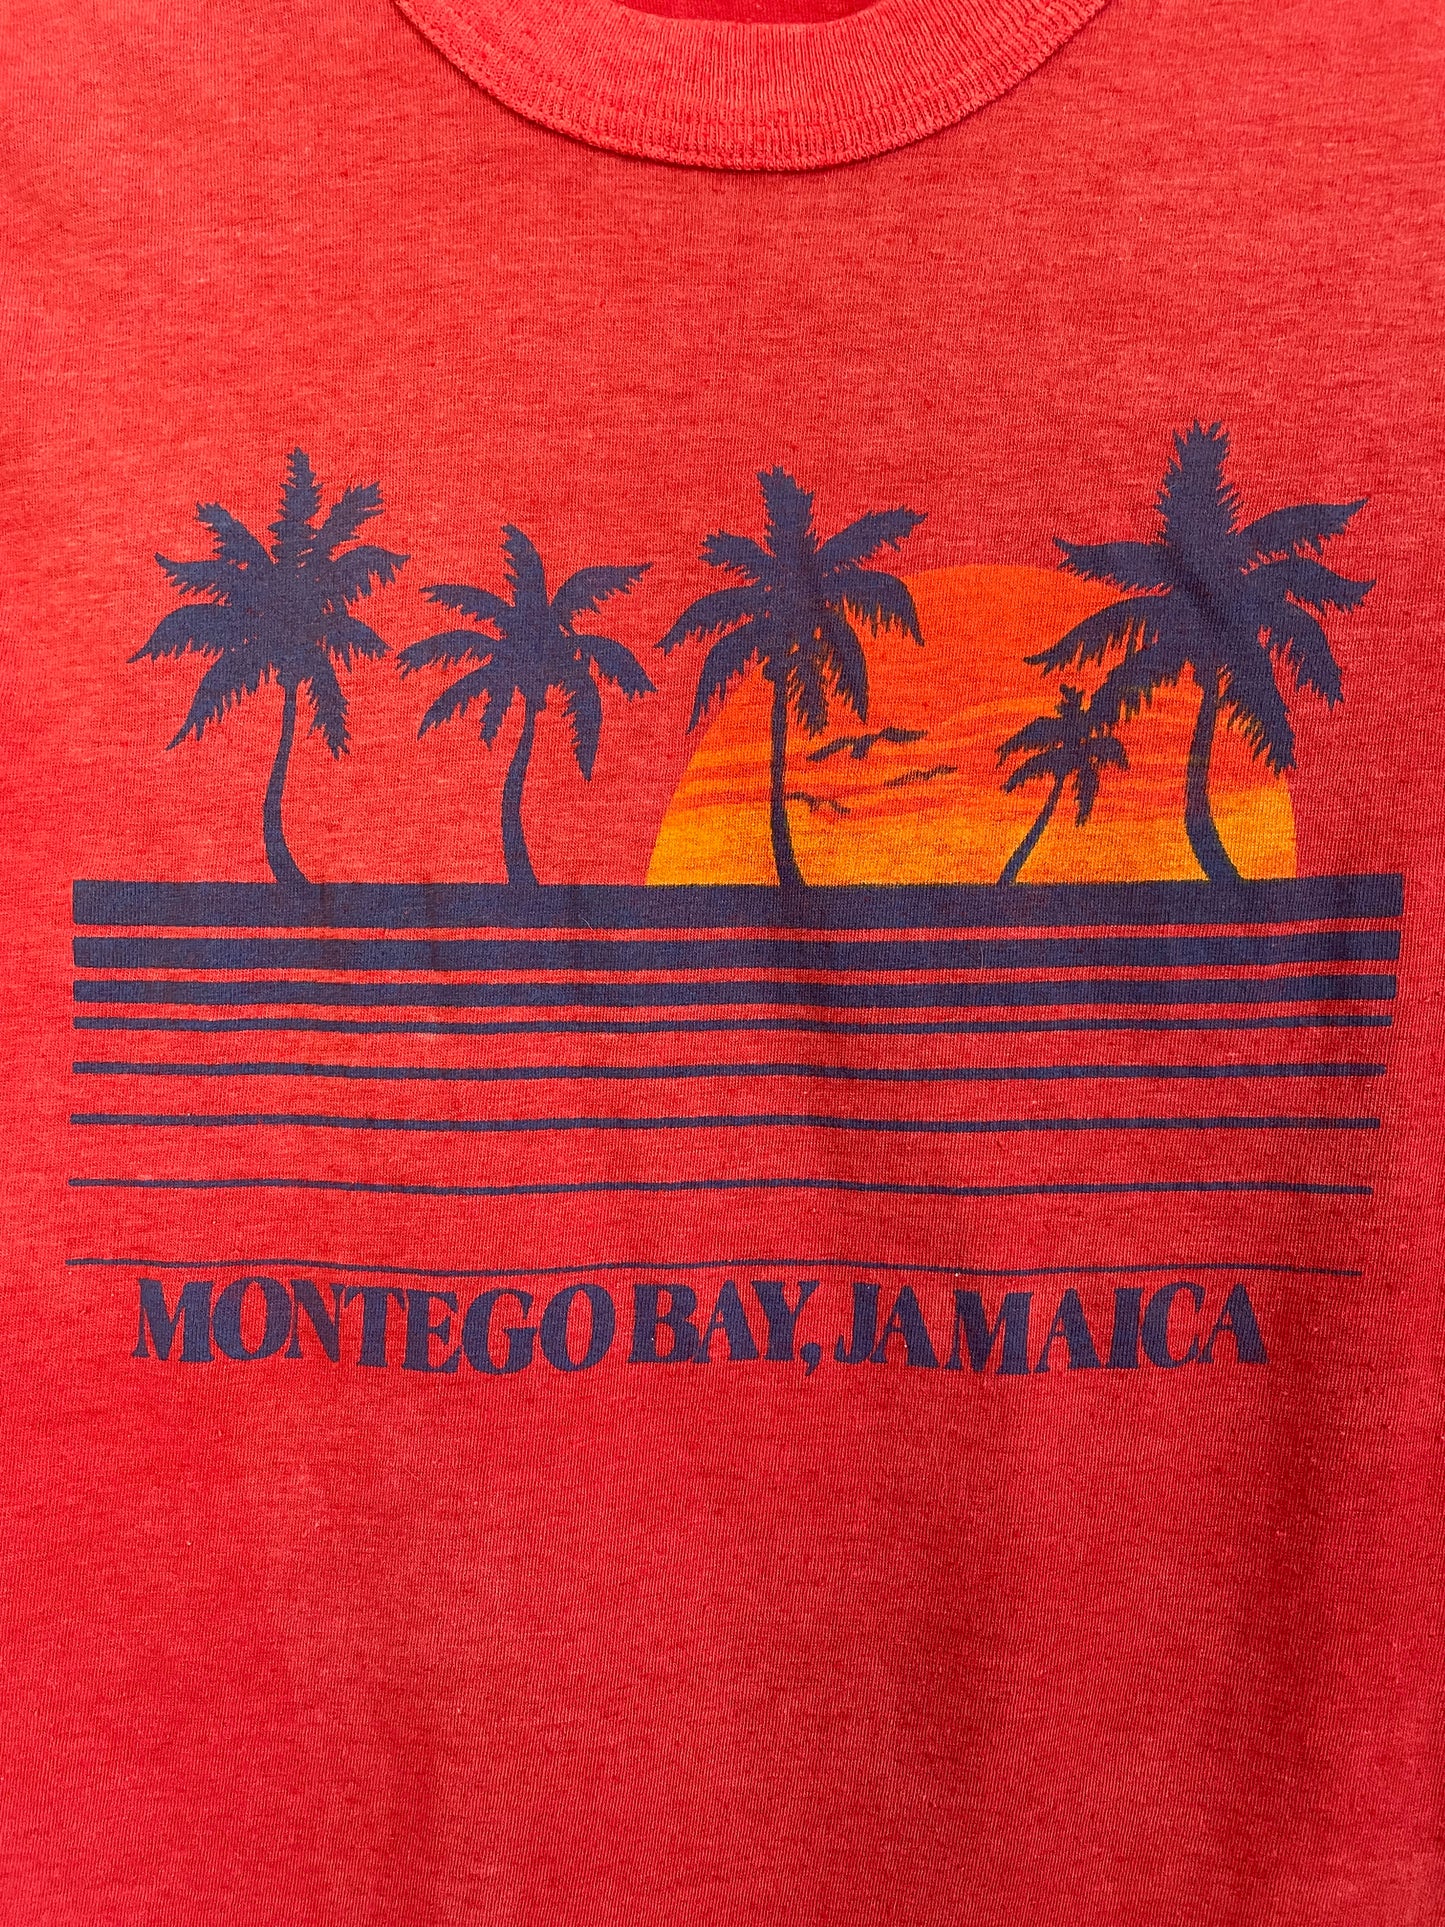 80s Montego Bay, Jamaica Tee